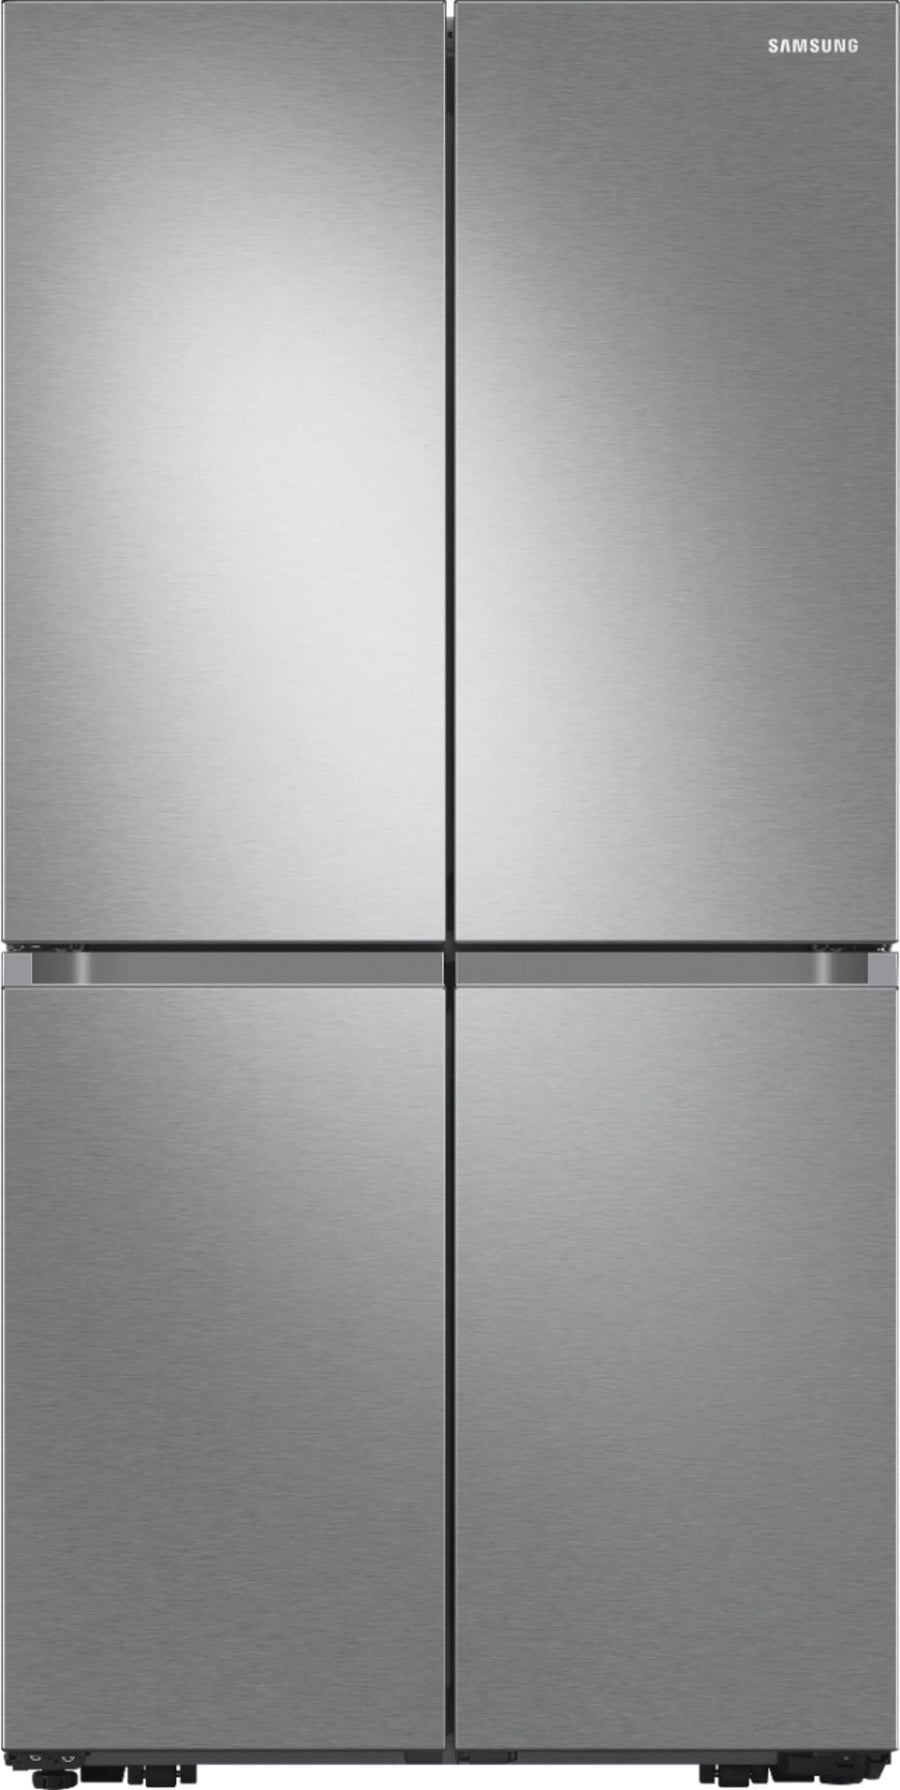 Samsung - 23 cu. ft. 4-Door Flex French Door Counter Depth Refrigerator with WiFi, Beverage Center and Dual Ice Maker - Stainless steel_0